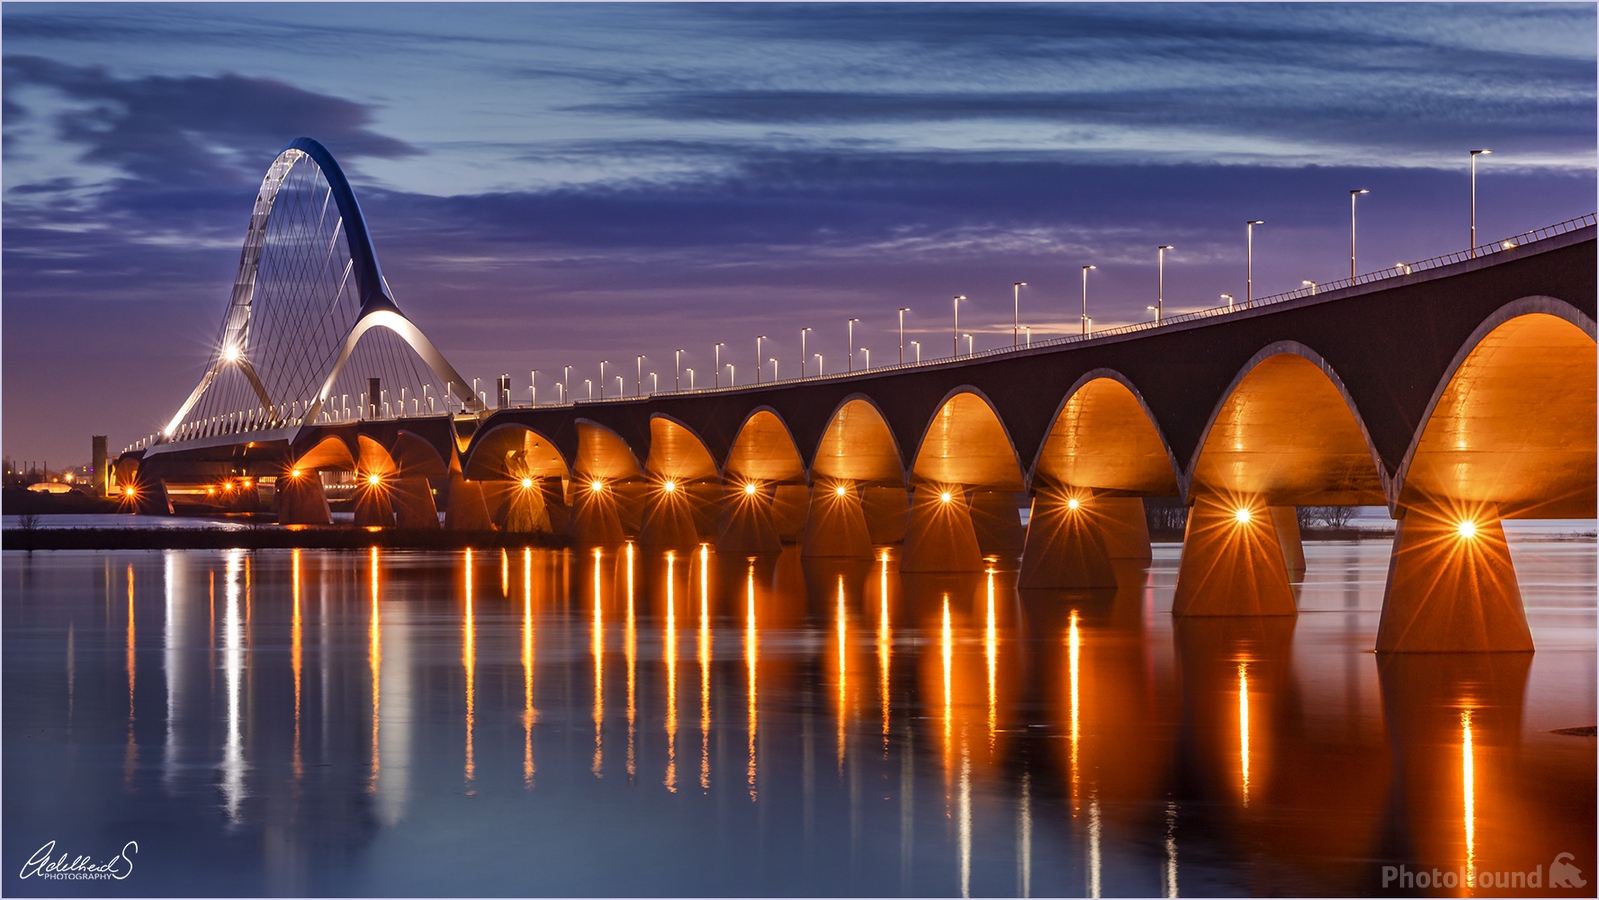 Image of Oversteek Bridge by Adelheid Smitt